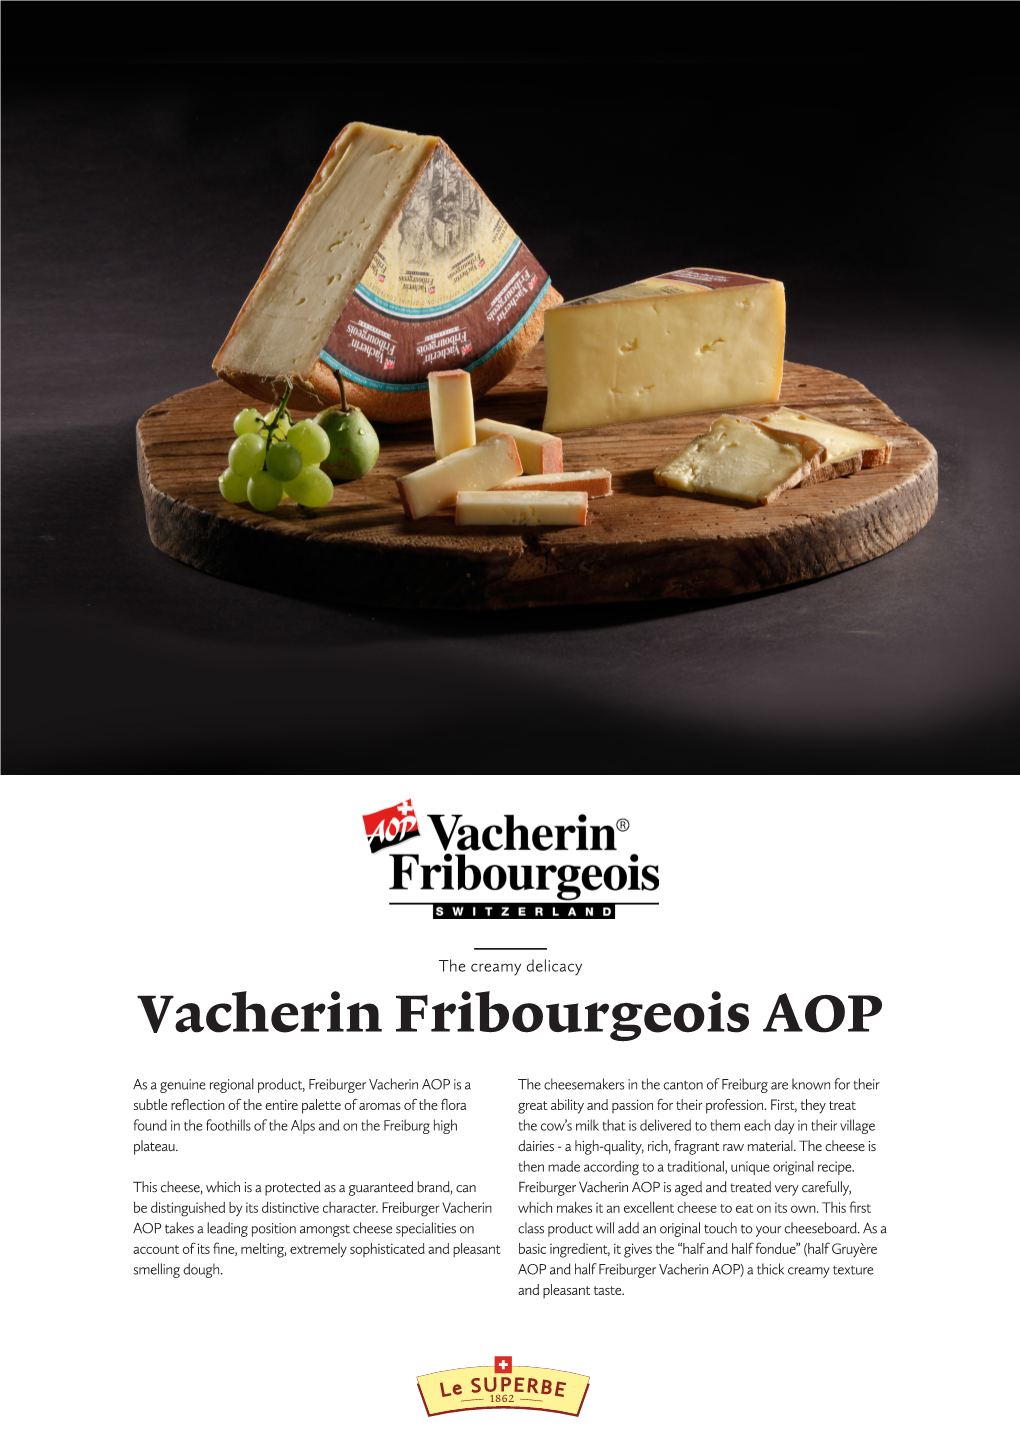 Vacherin Fribourgeois AOP